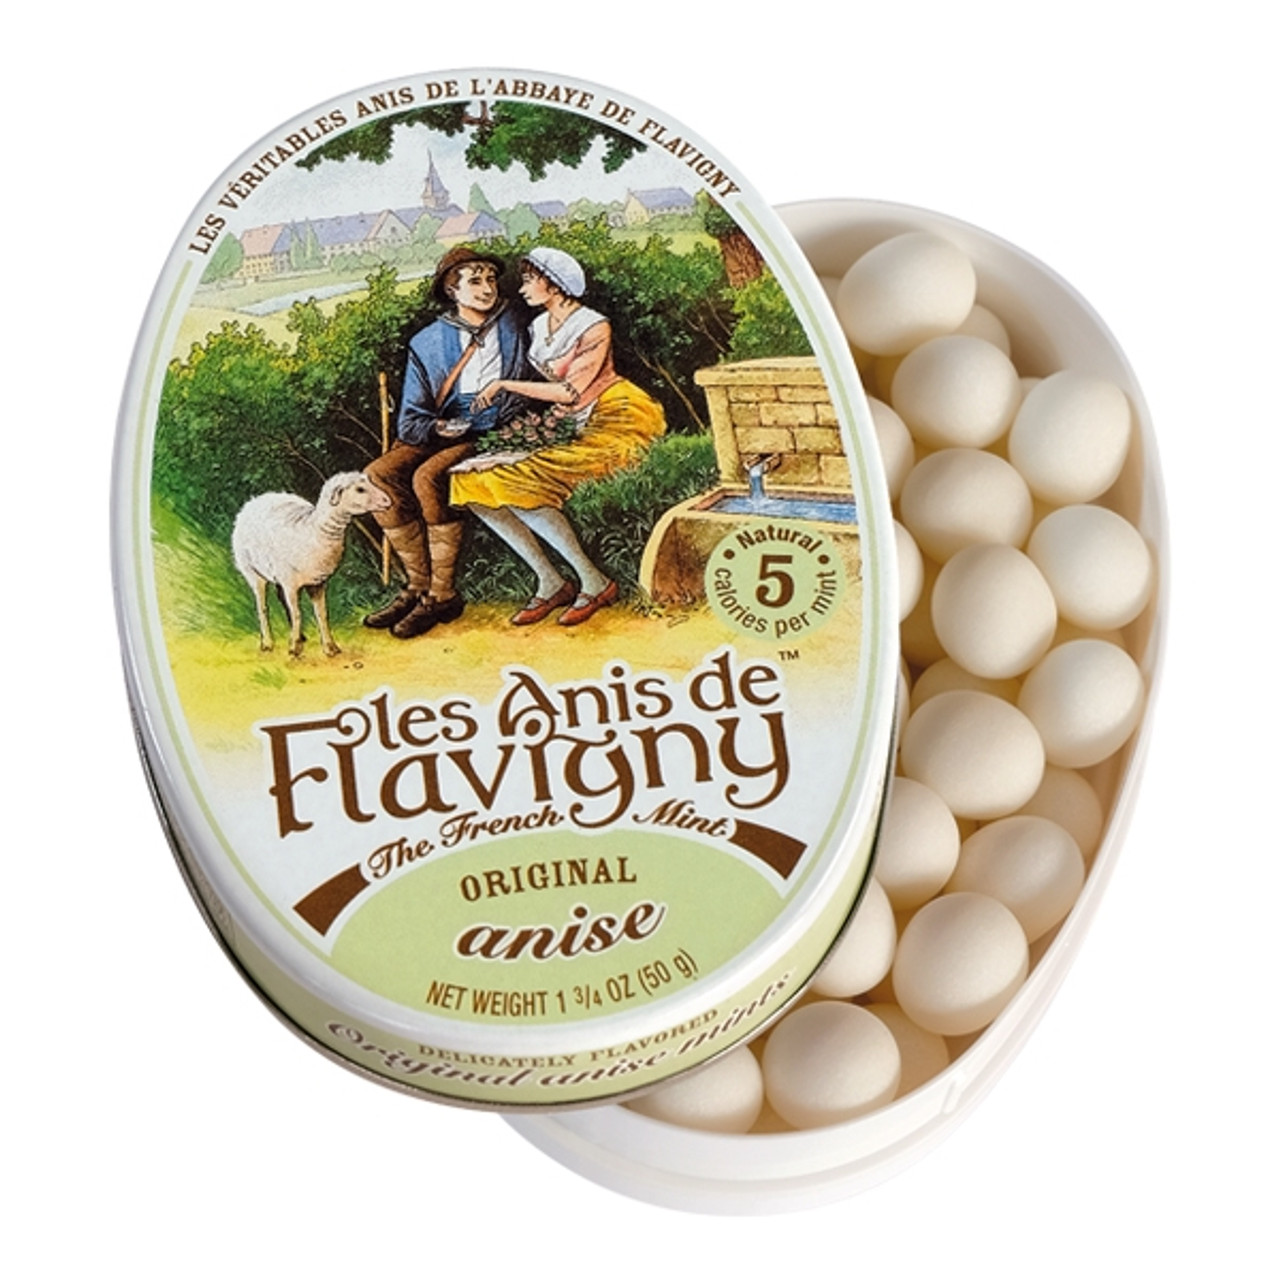 Les Anis de Flavigny Organic Anis Flavored Mints